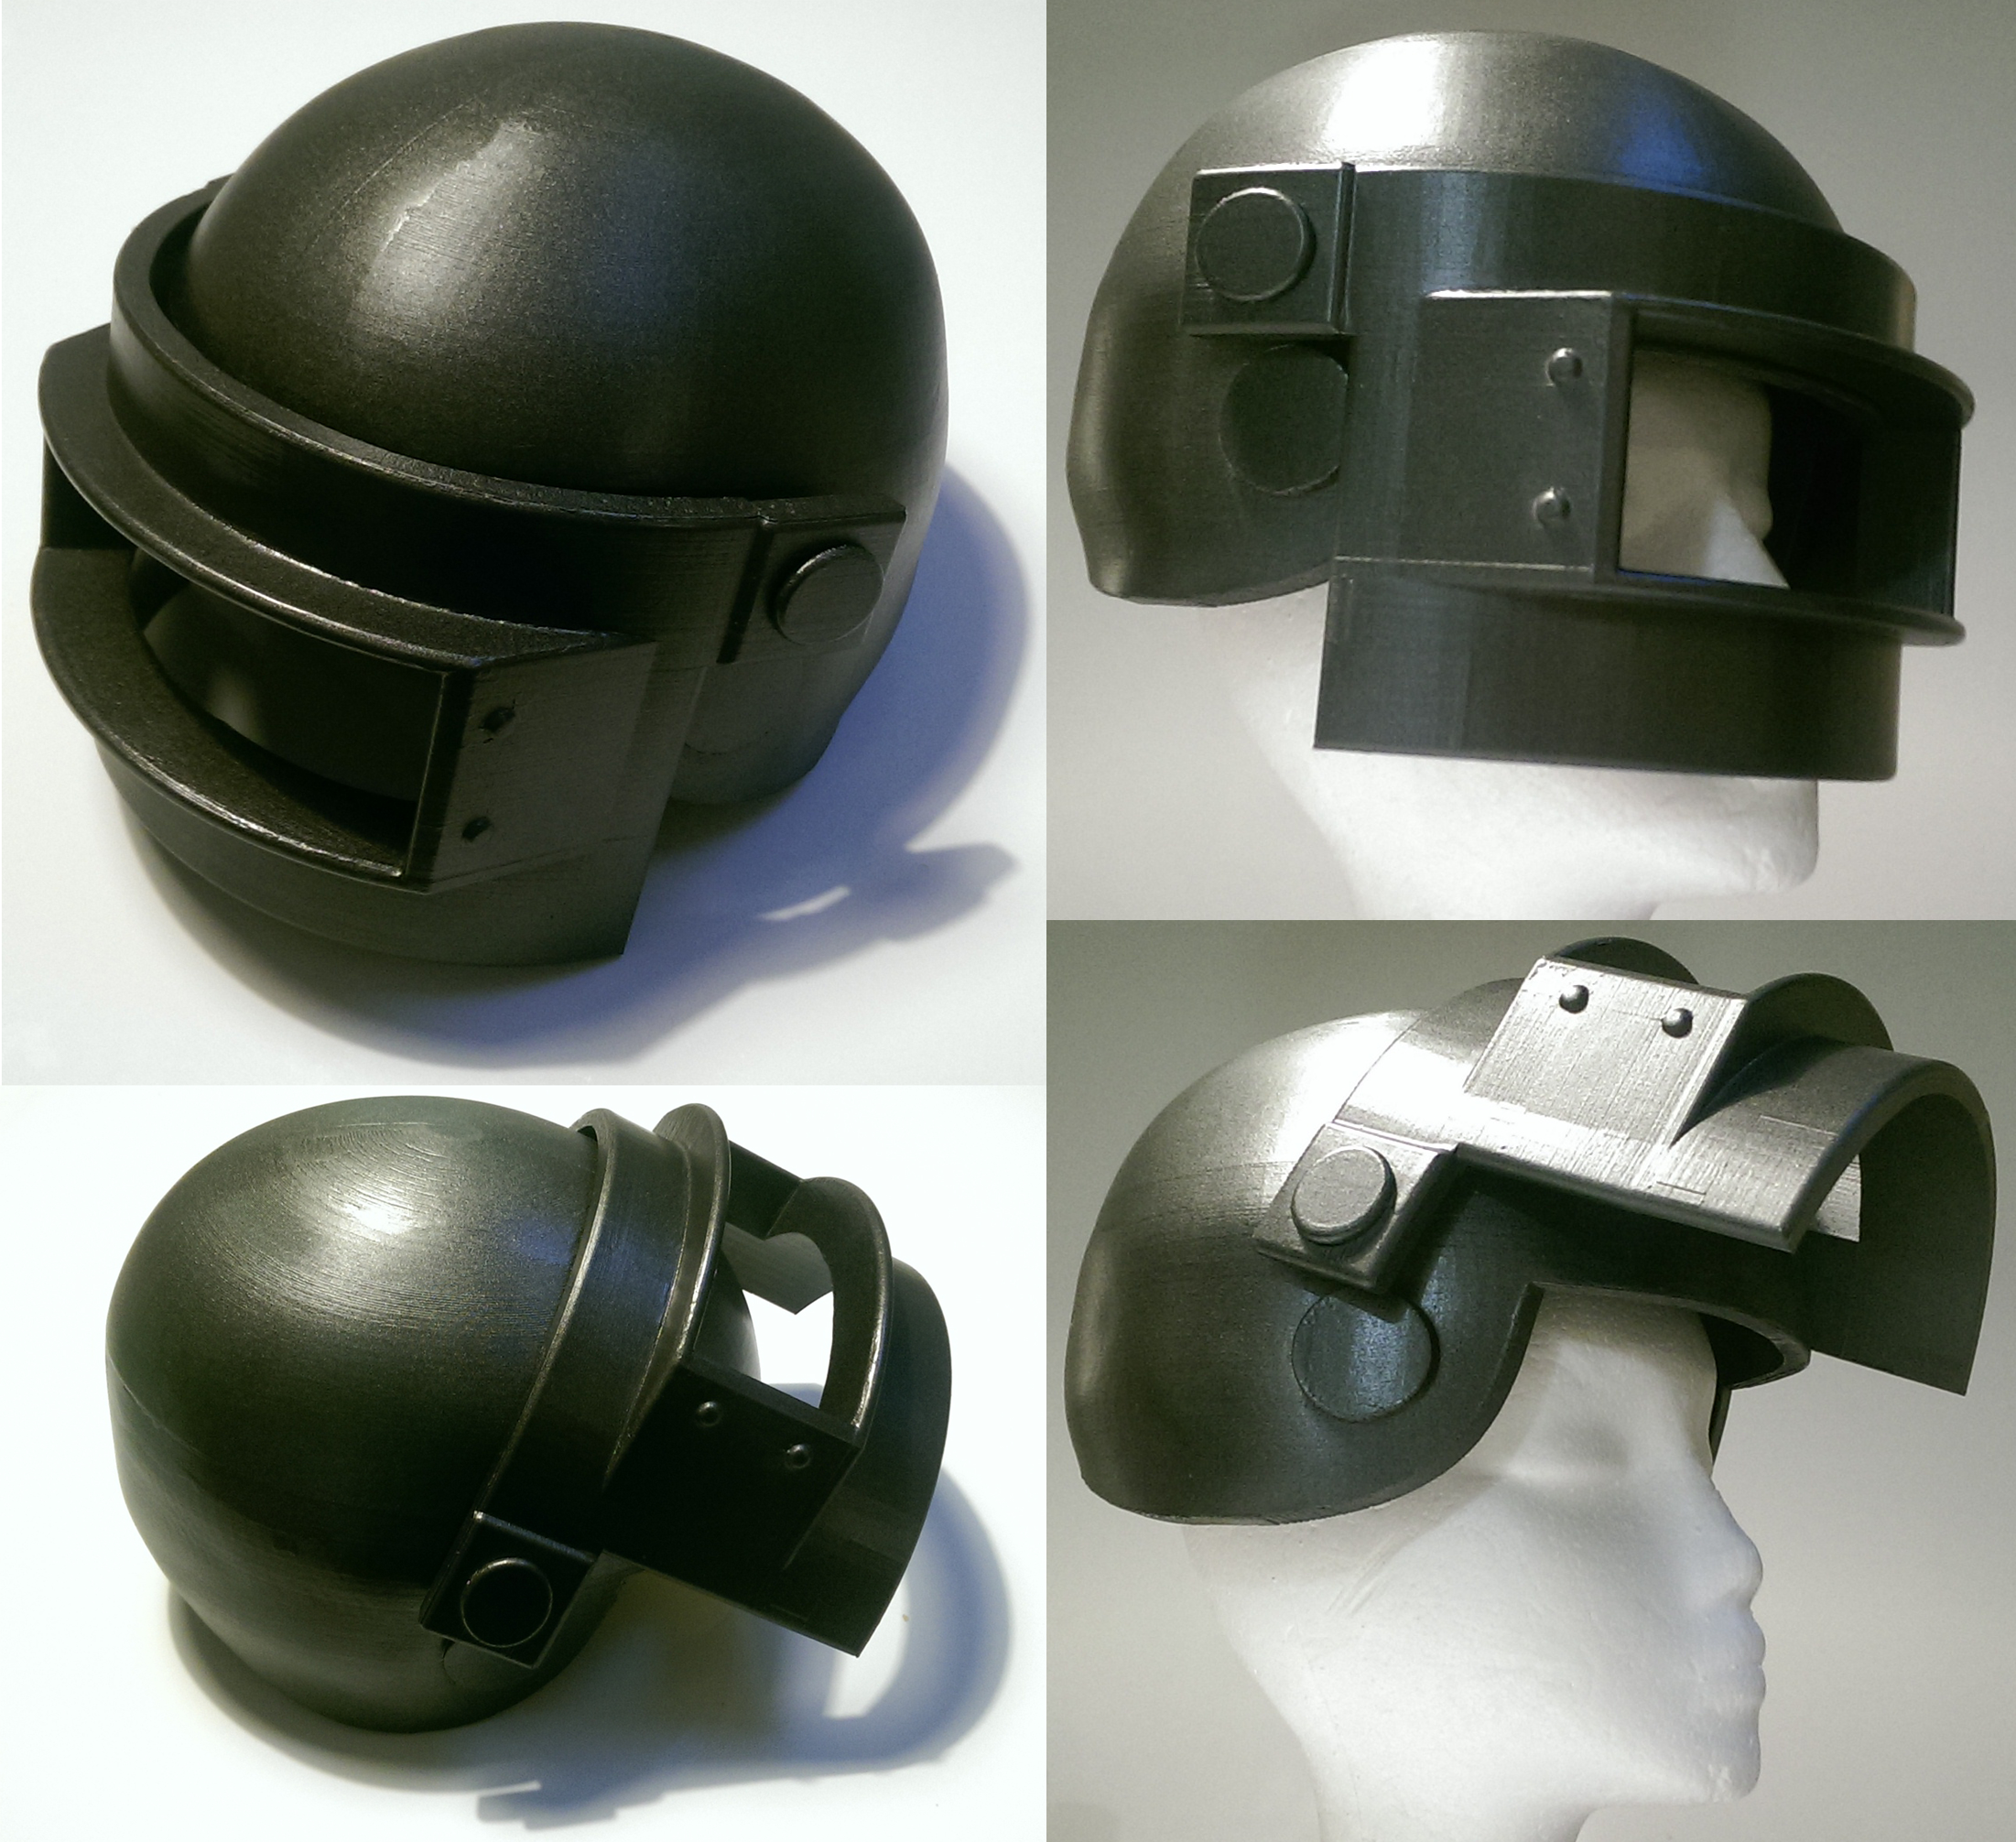 PUBG lv3 helmet by nejcr26 on DeviantArt